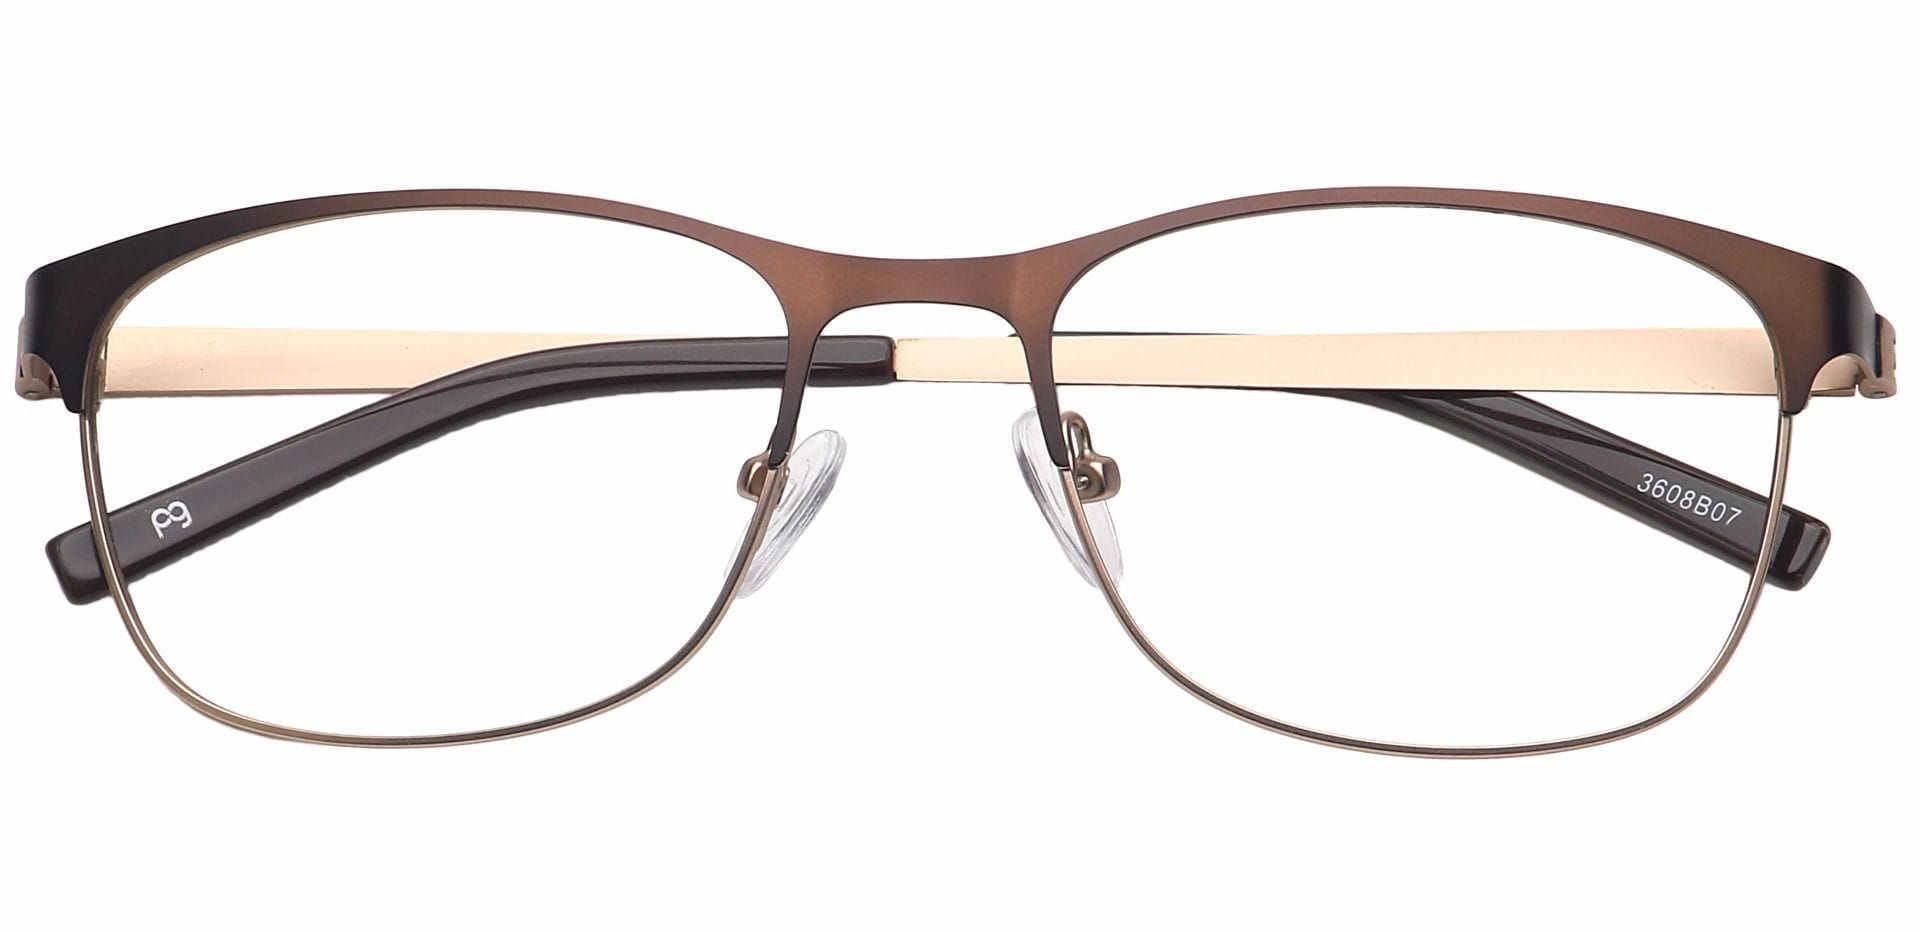 Tona Rectangle Eyeglasses Frame - Brown